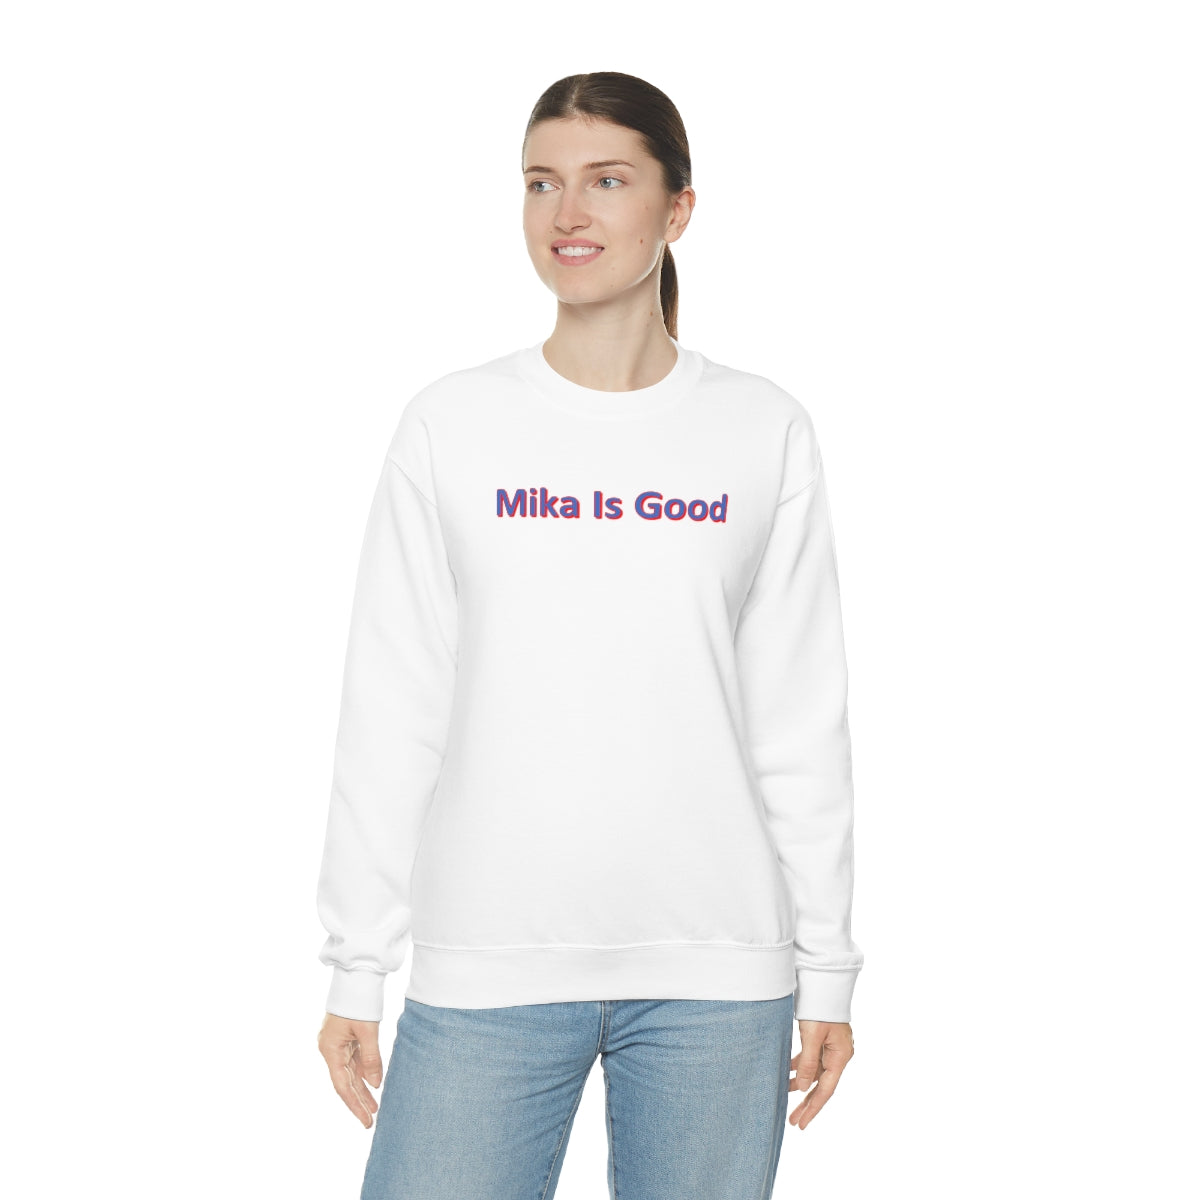 Mika Is Good Sweater - IsGoodBrand